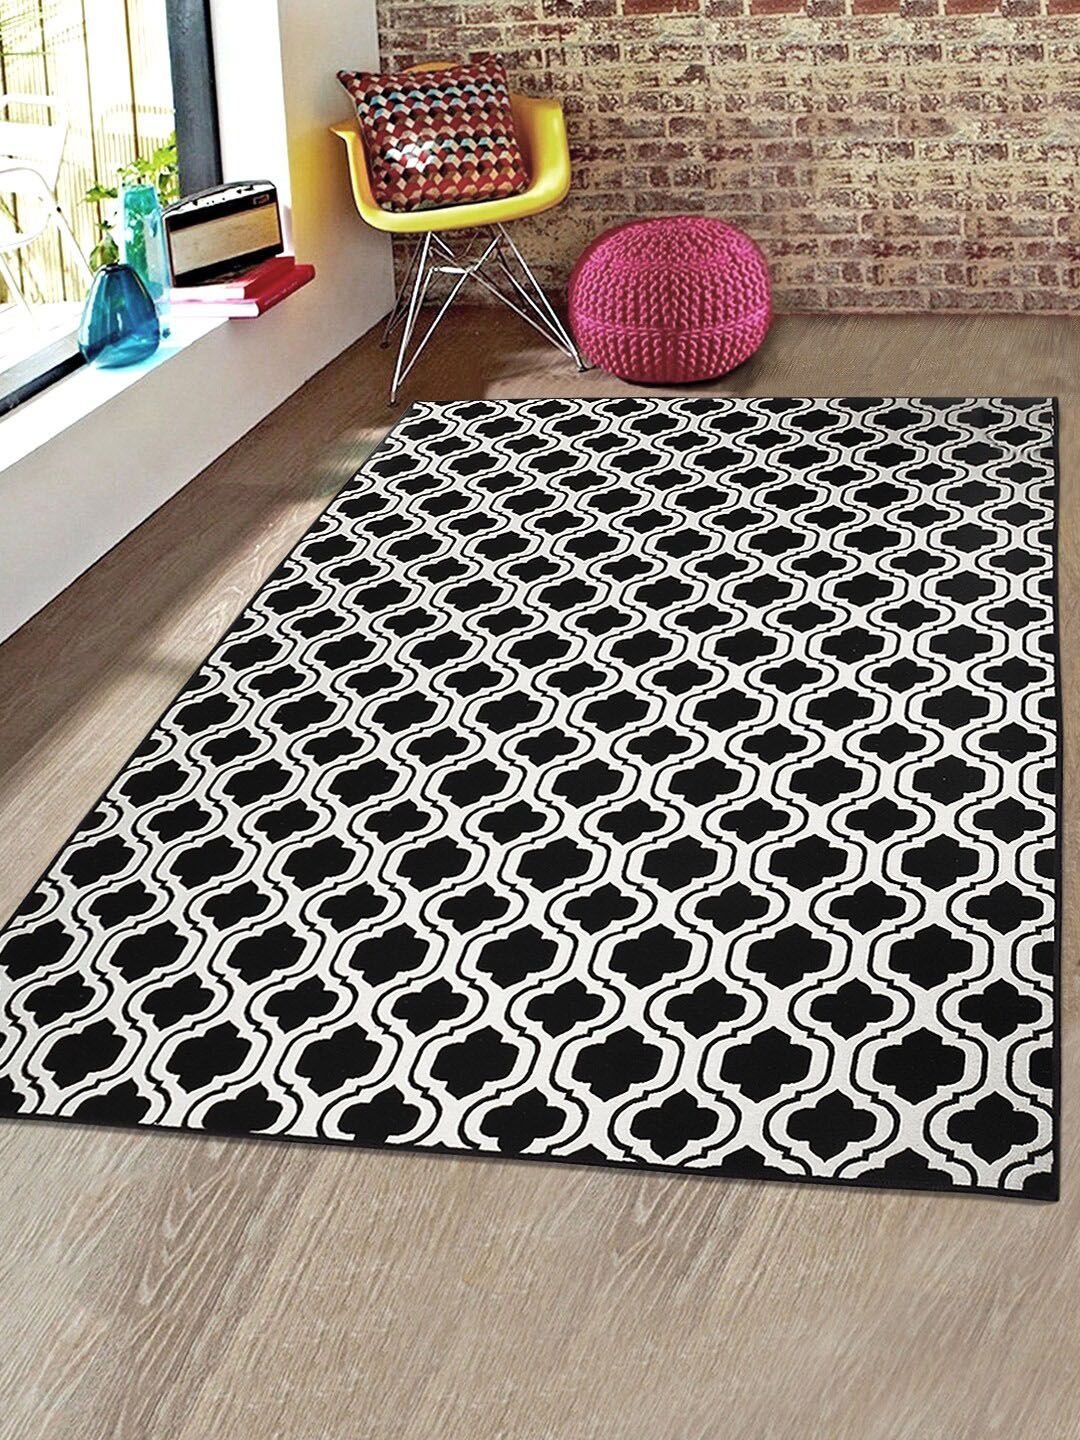 Saral Home Black & White Printed Cotton Carpet Price in India